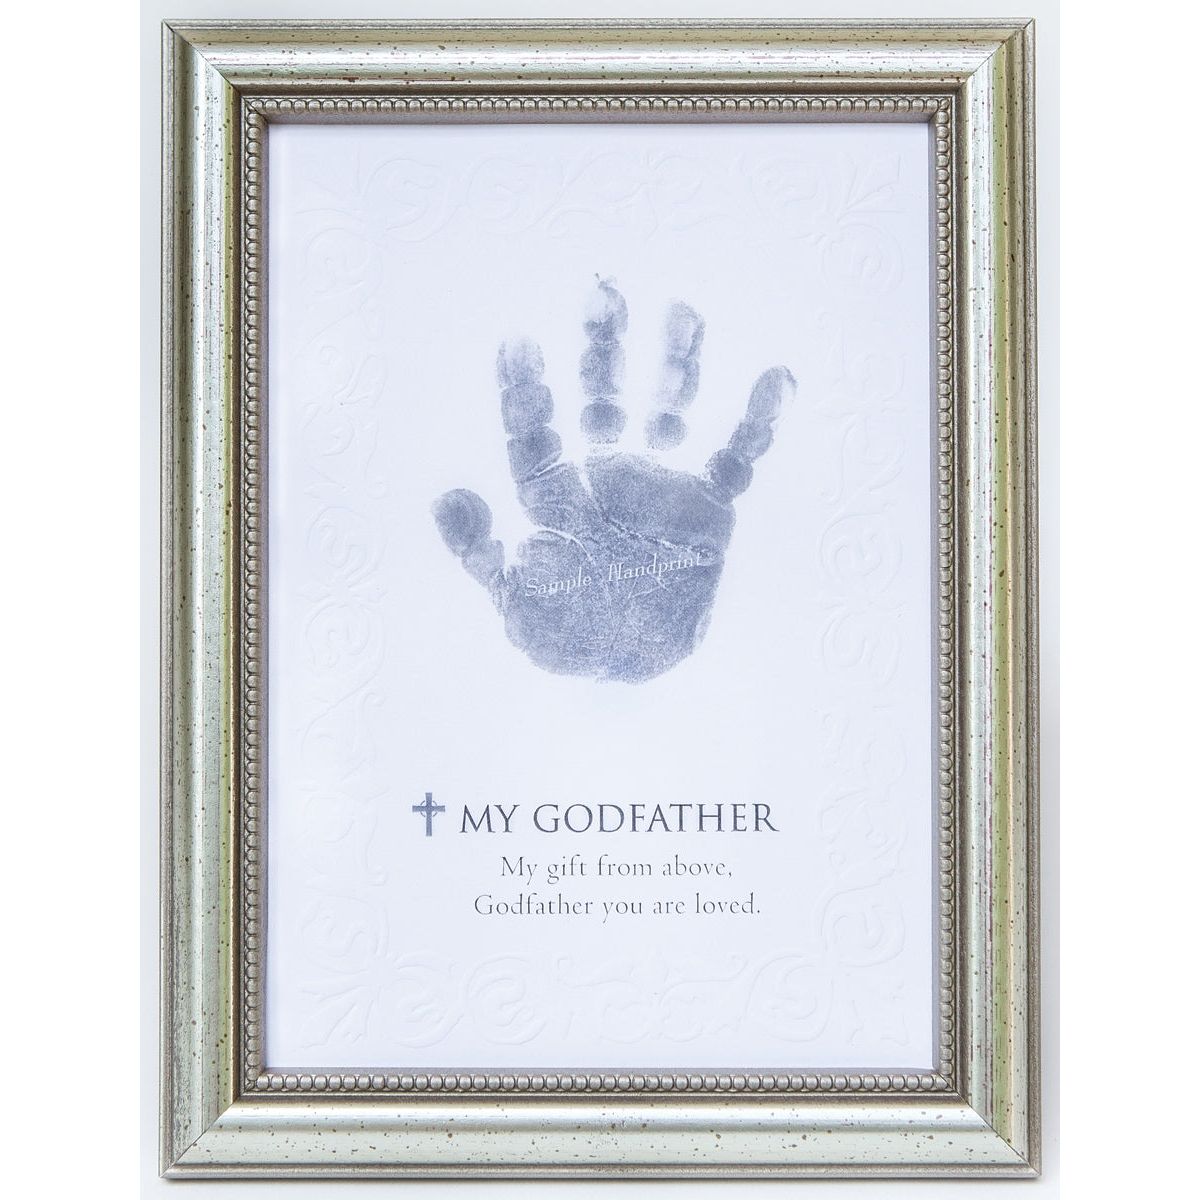 My Godfather handprint keepsake in elegant frame in silver with embossed beaded design.